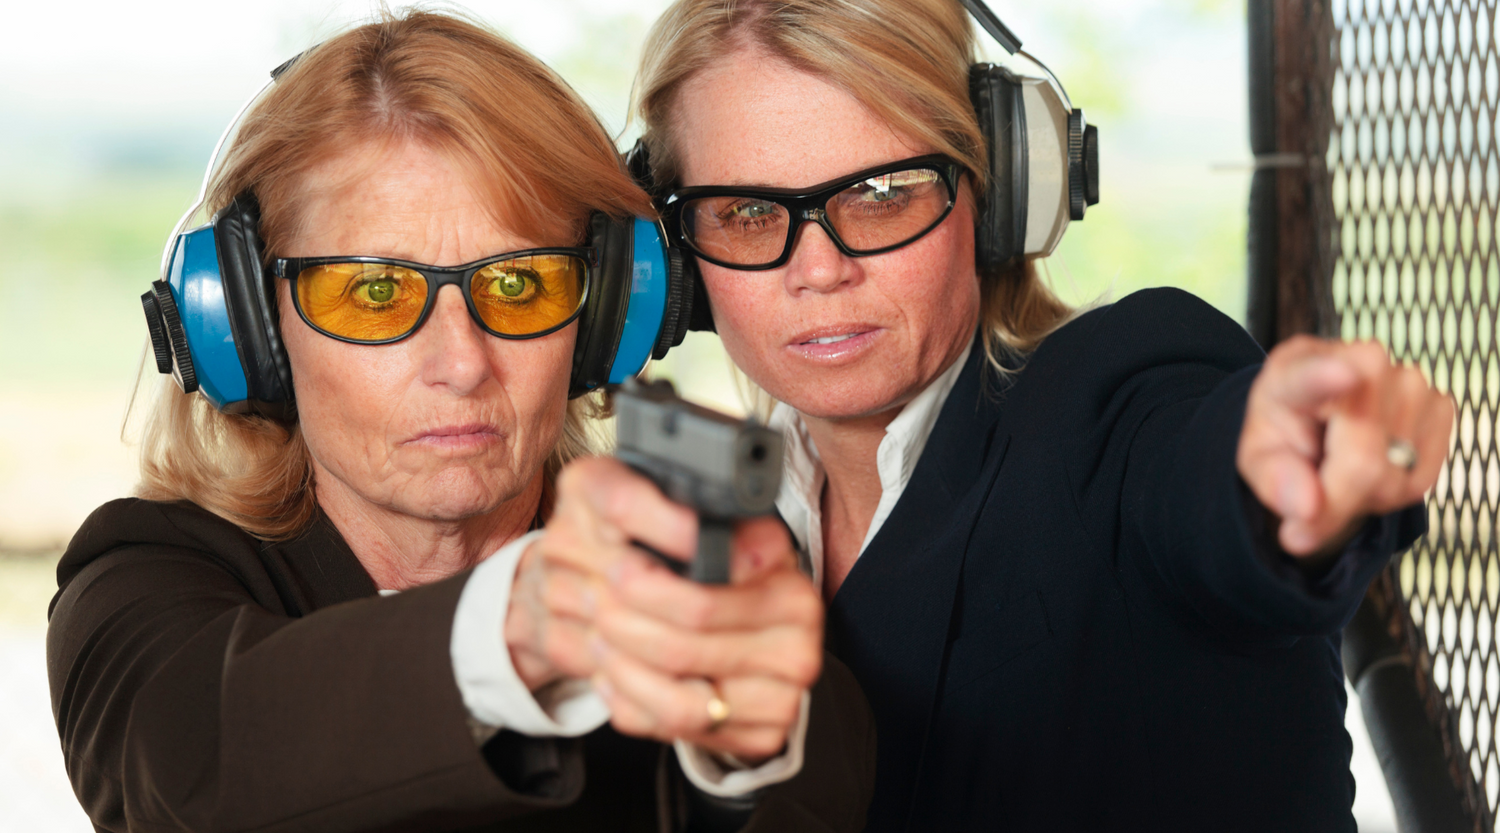 Two women at the gun range selecting the best gun for women